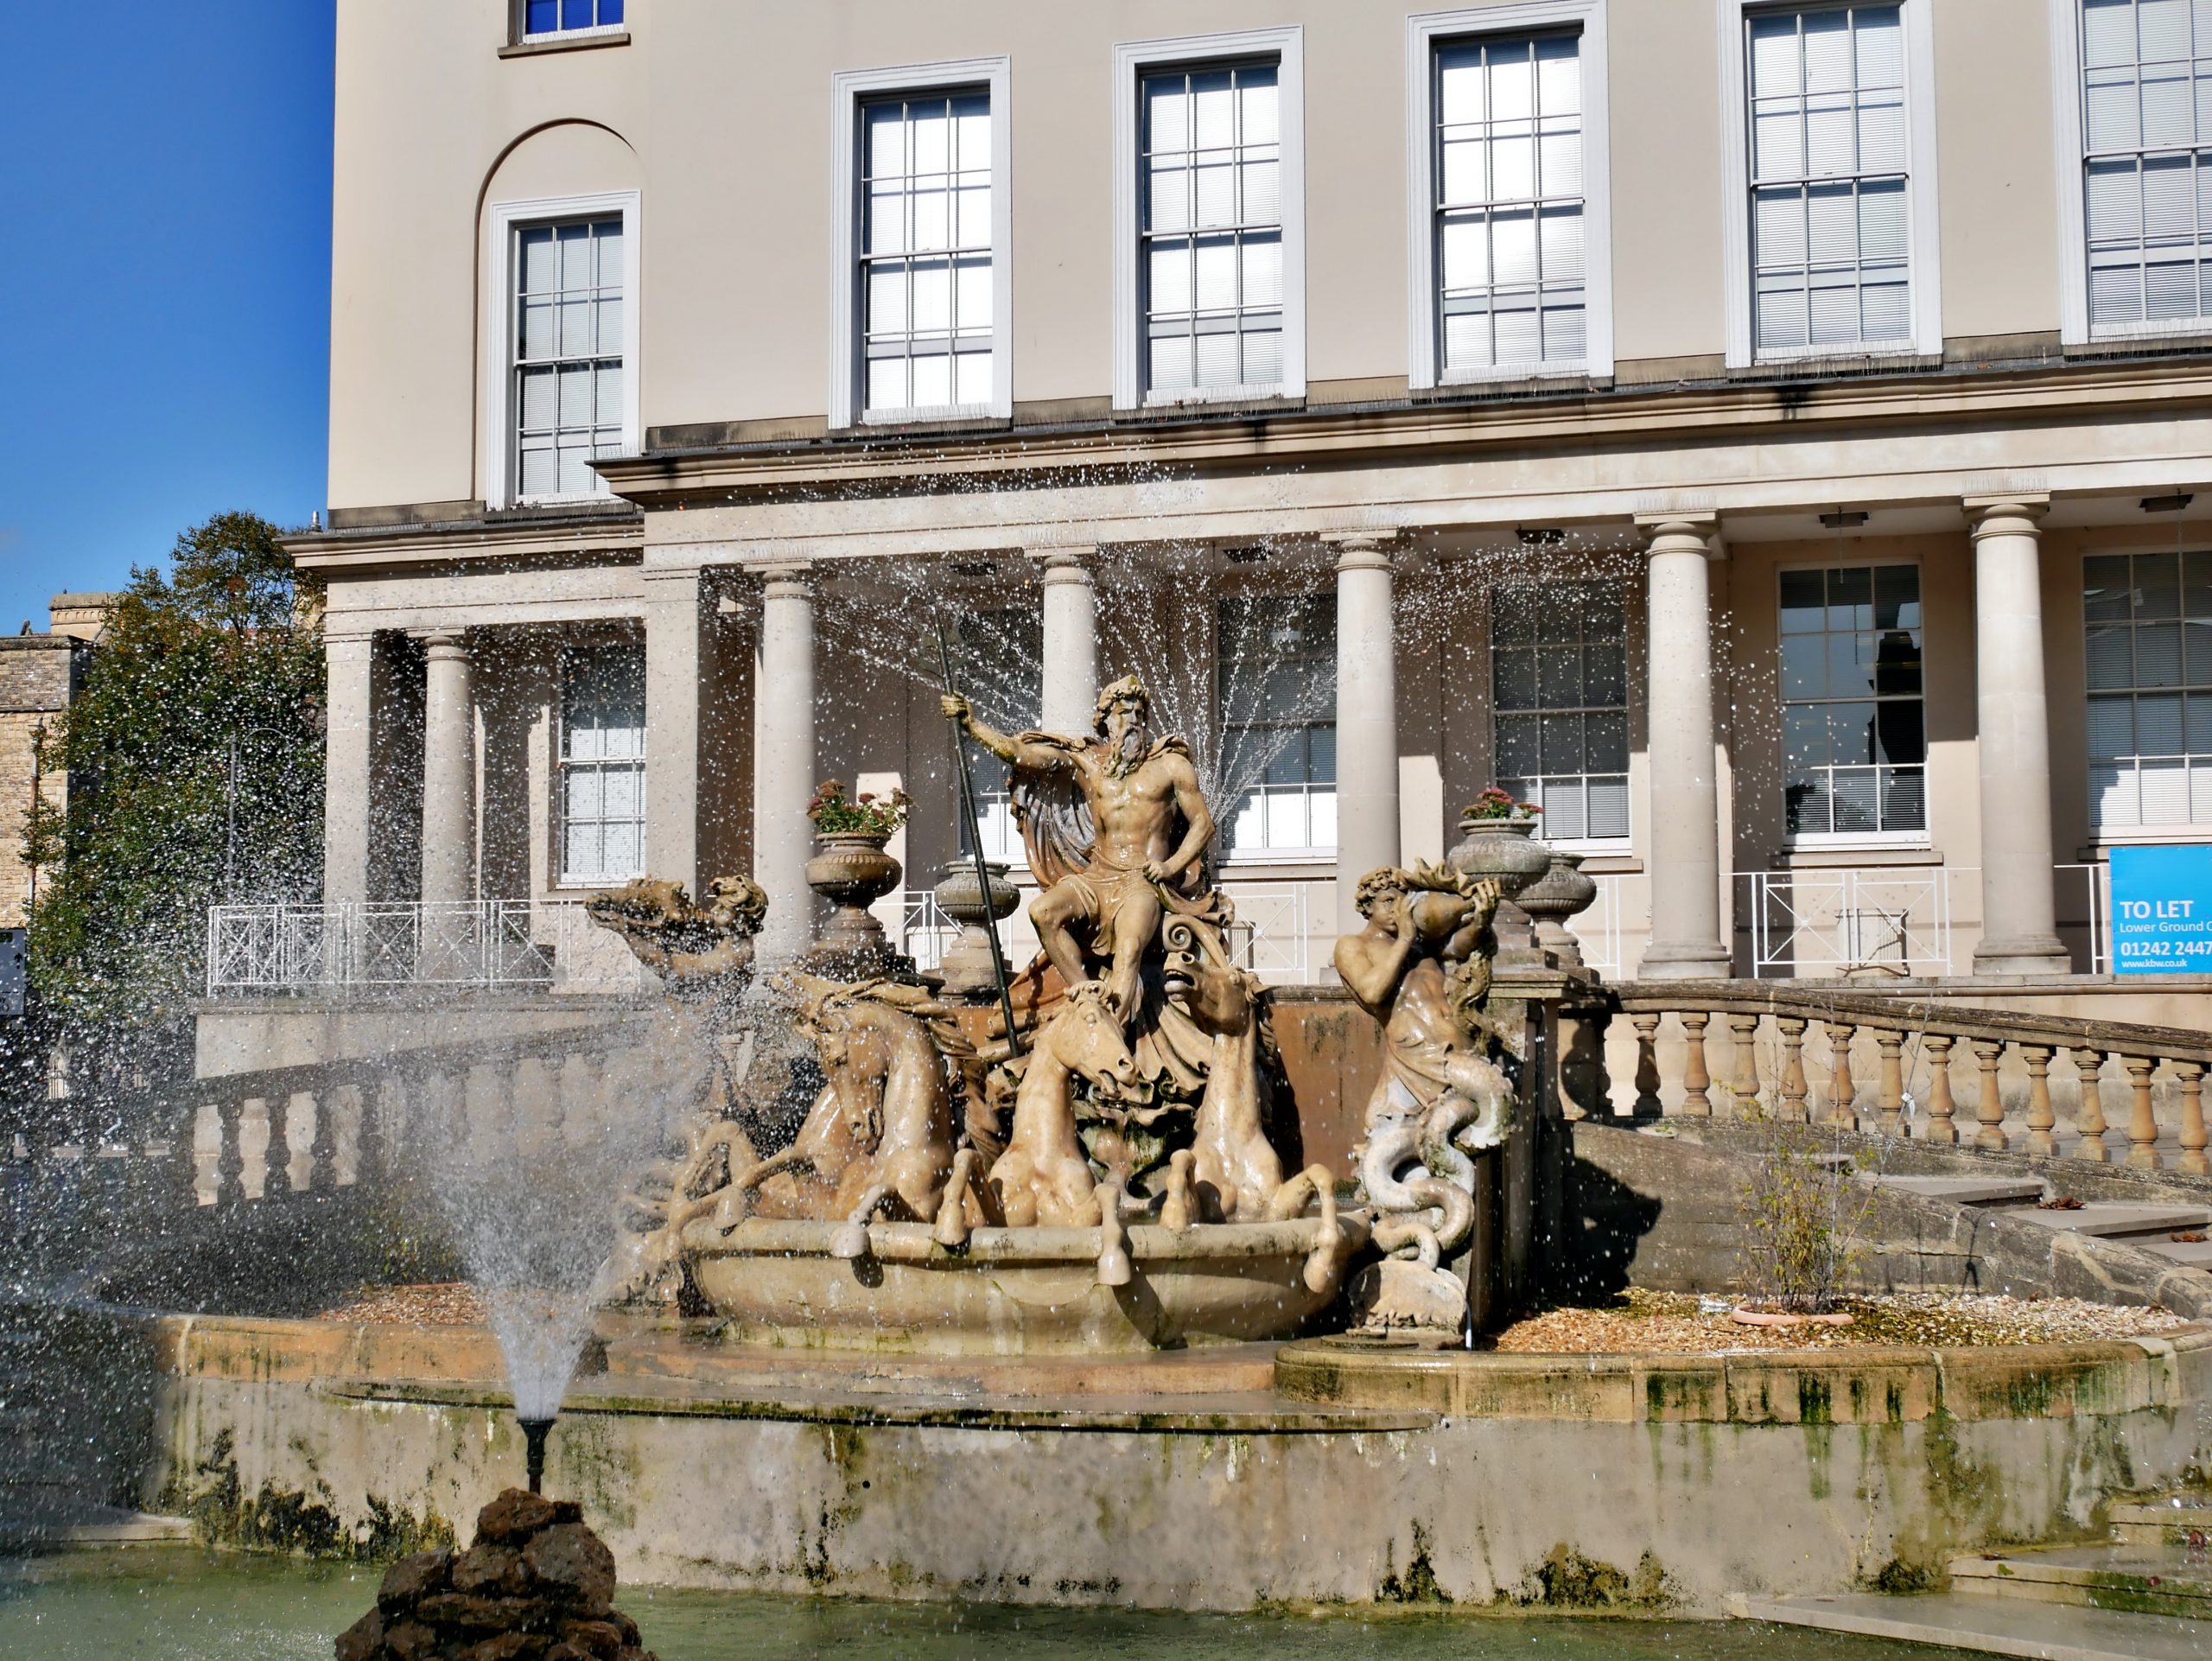 The promenade Italian inspired fountain